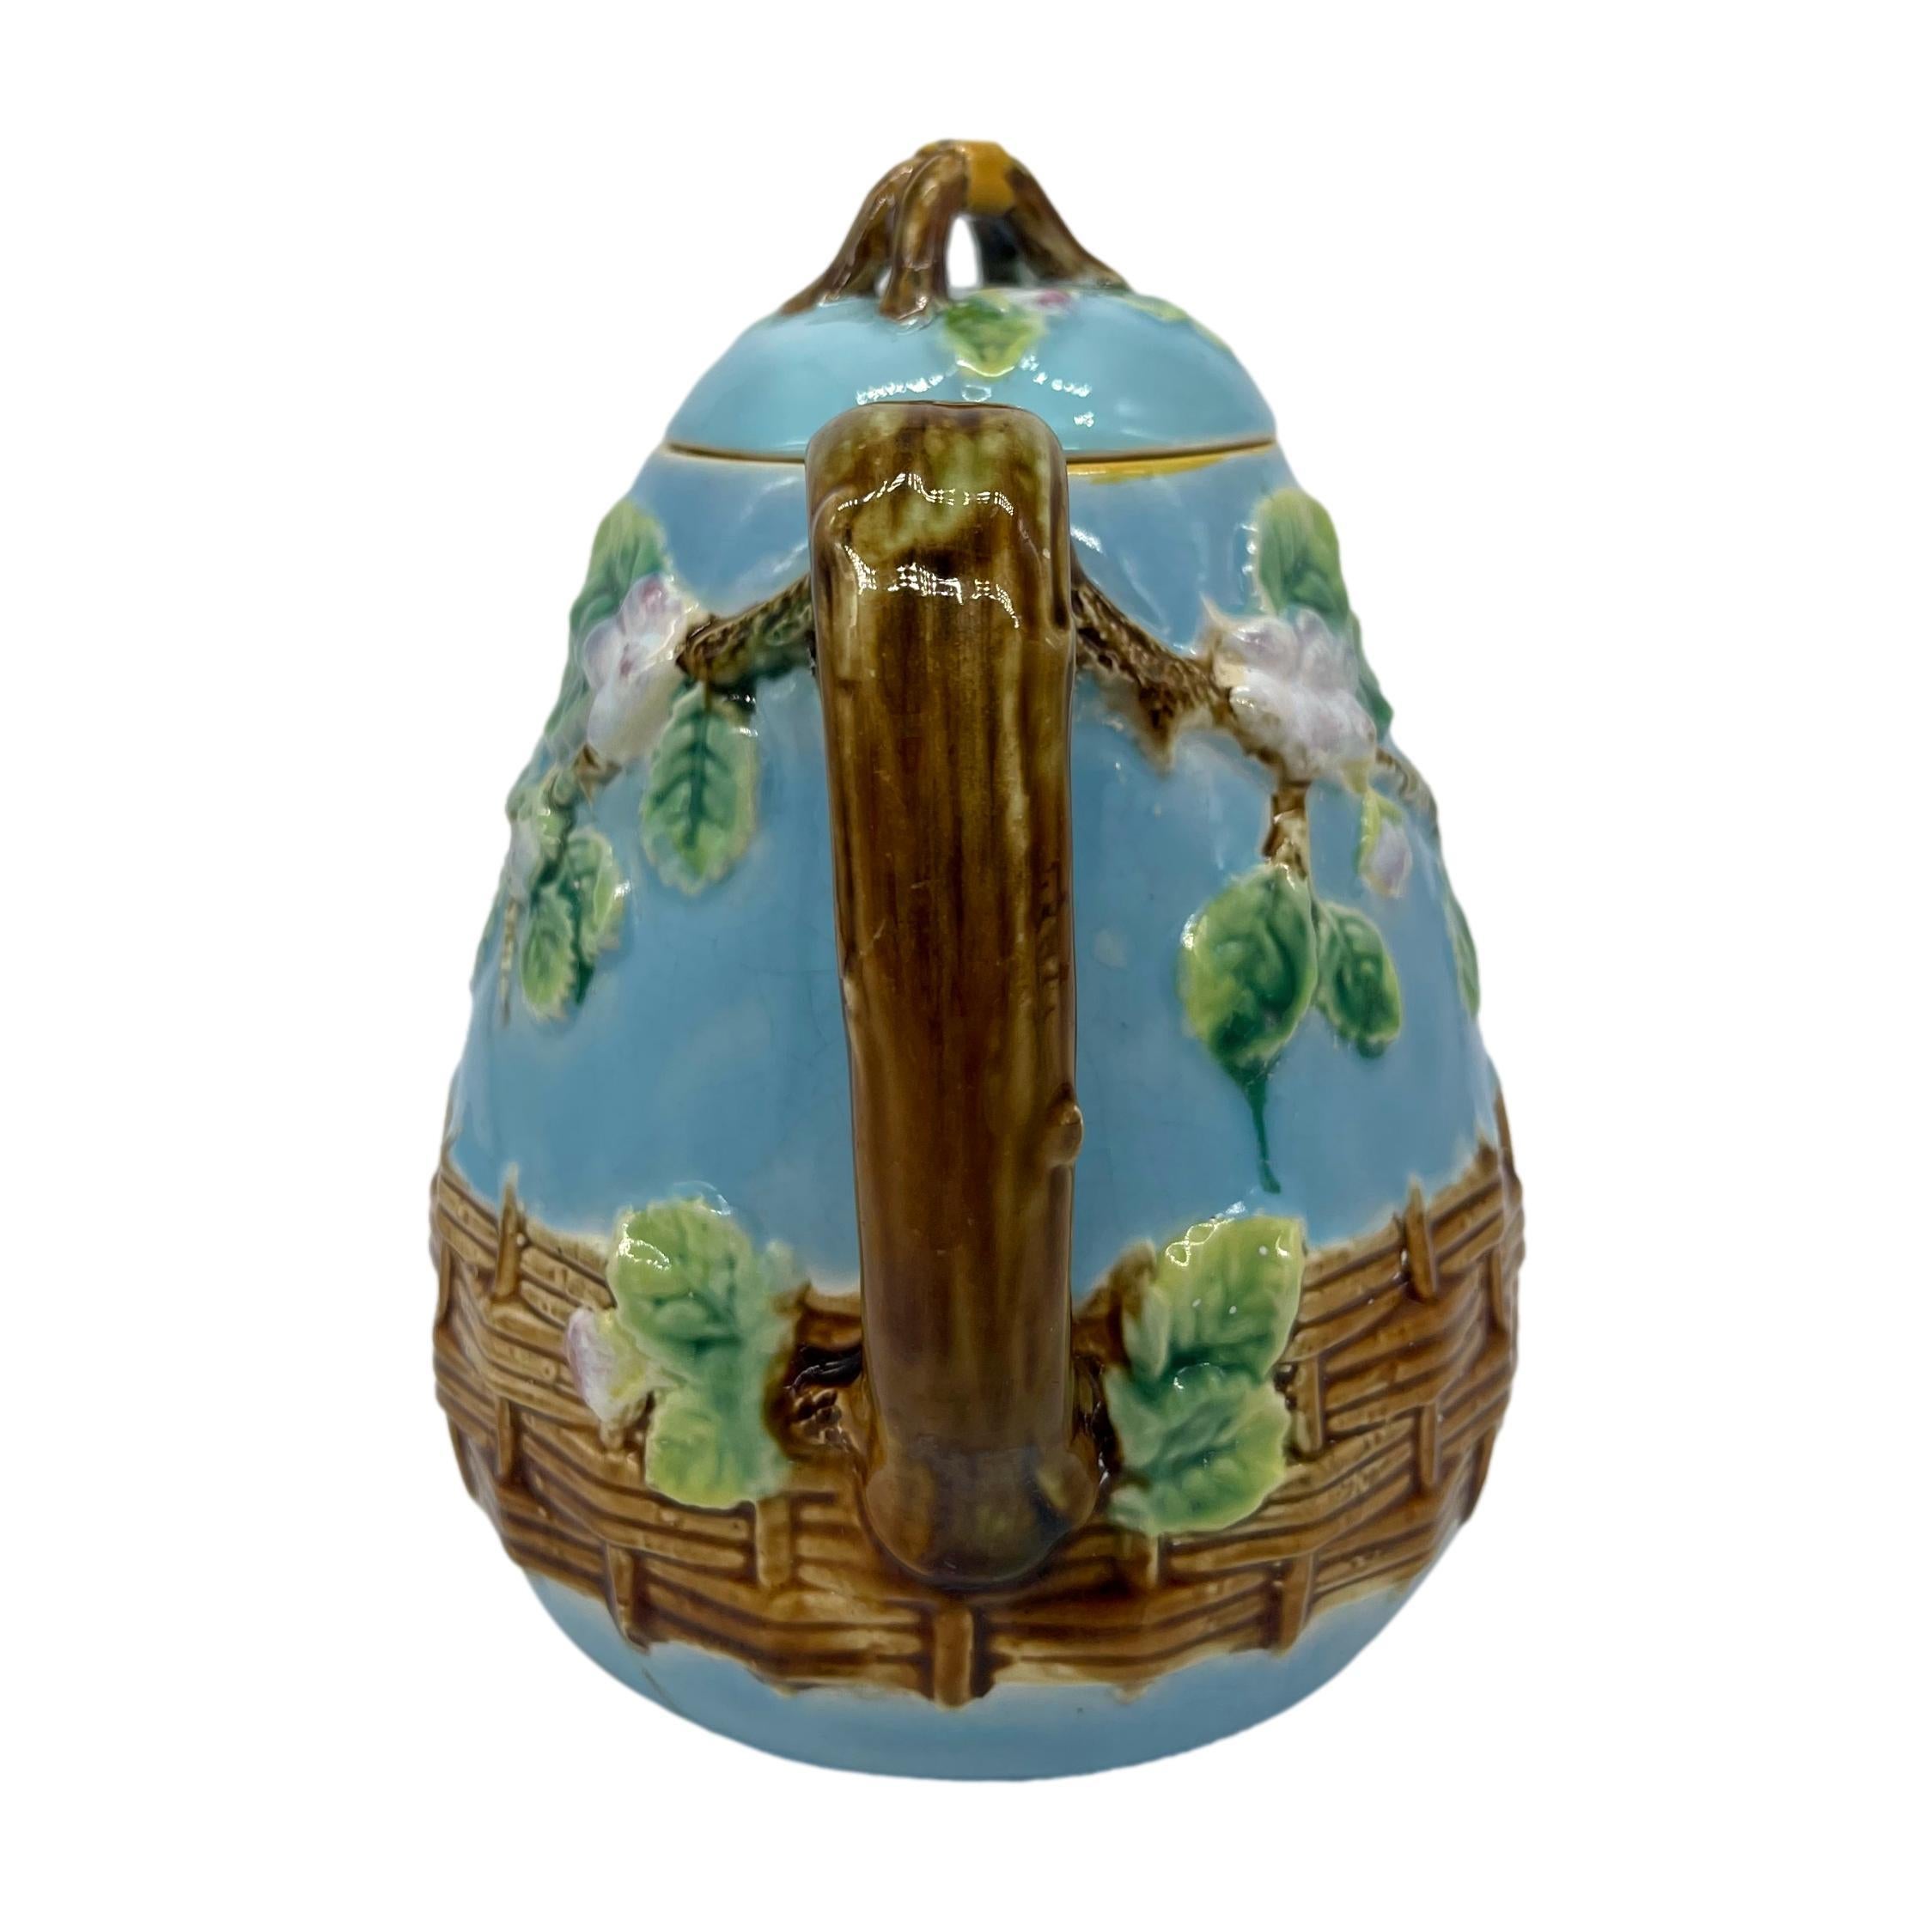 English George Jones Majolica 'Apple Blossom' Teapot Basketweave on Turquoise, ca. 1873 For Sale